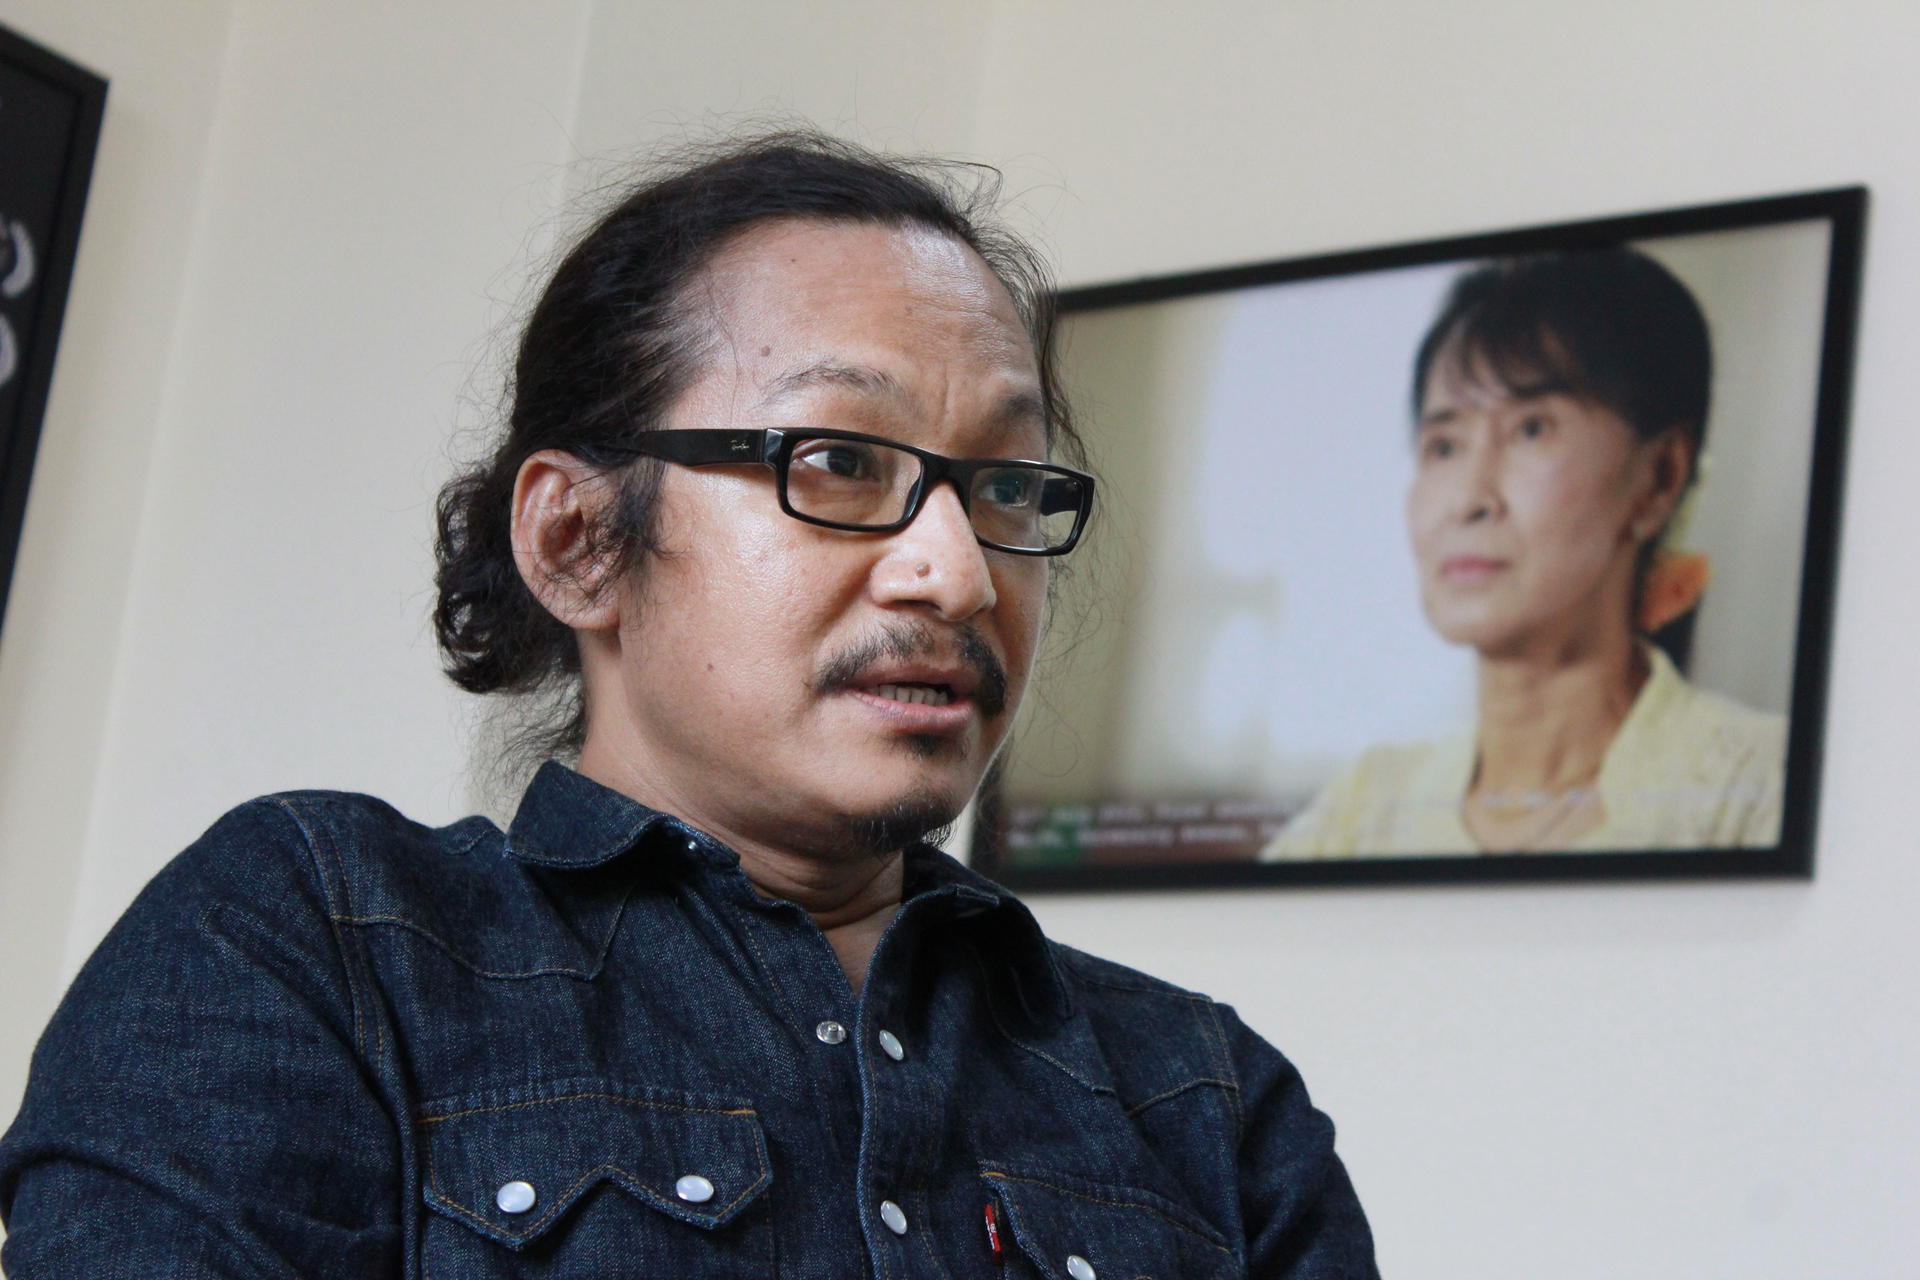 Myanmese filmmaker Min Htin Ko Ko Gyi, with a photograph of his inspiration, Aung San Suu Kyi, in the background. Photo: Hong Sar